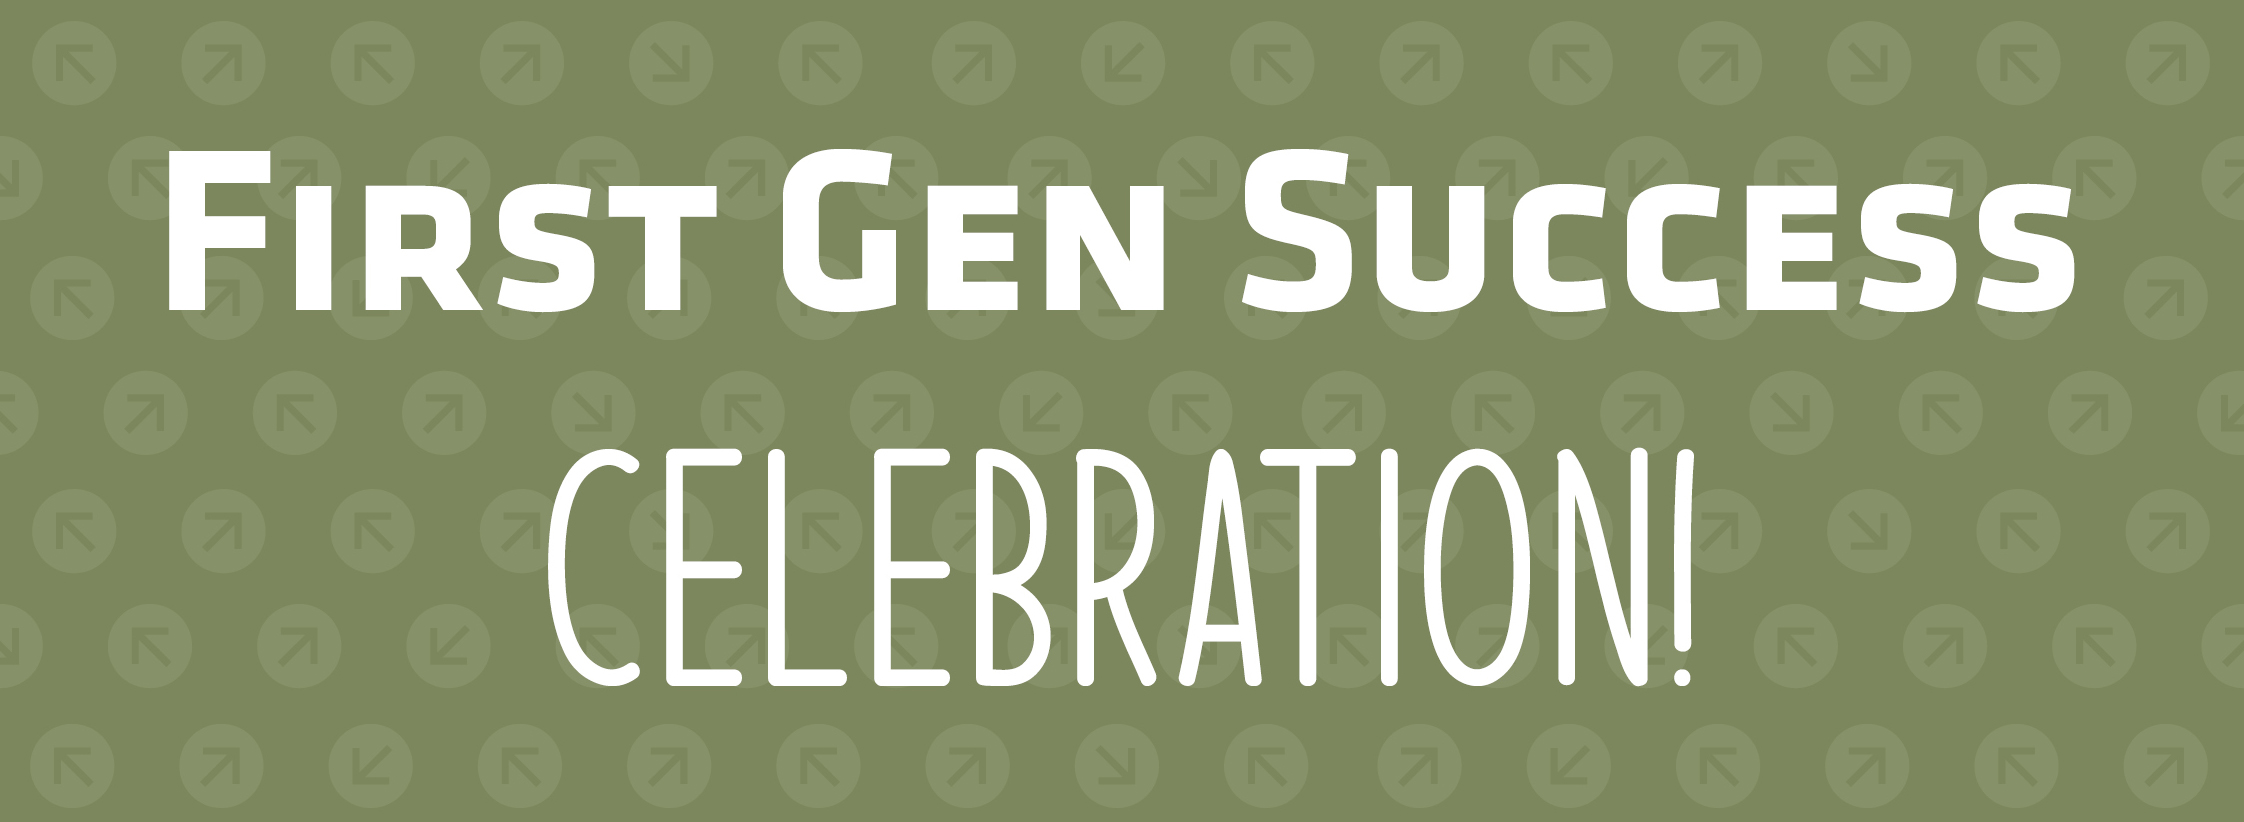 First Gen Success | Celebration!